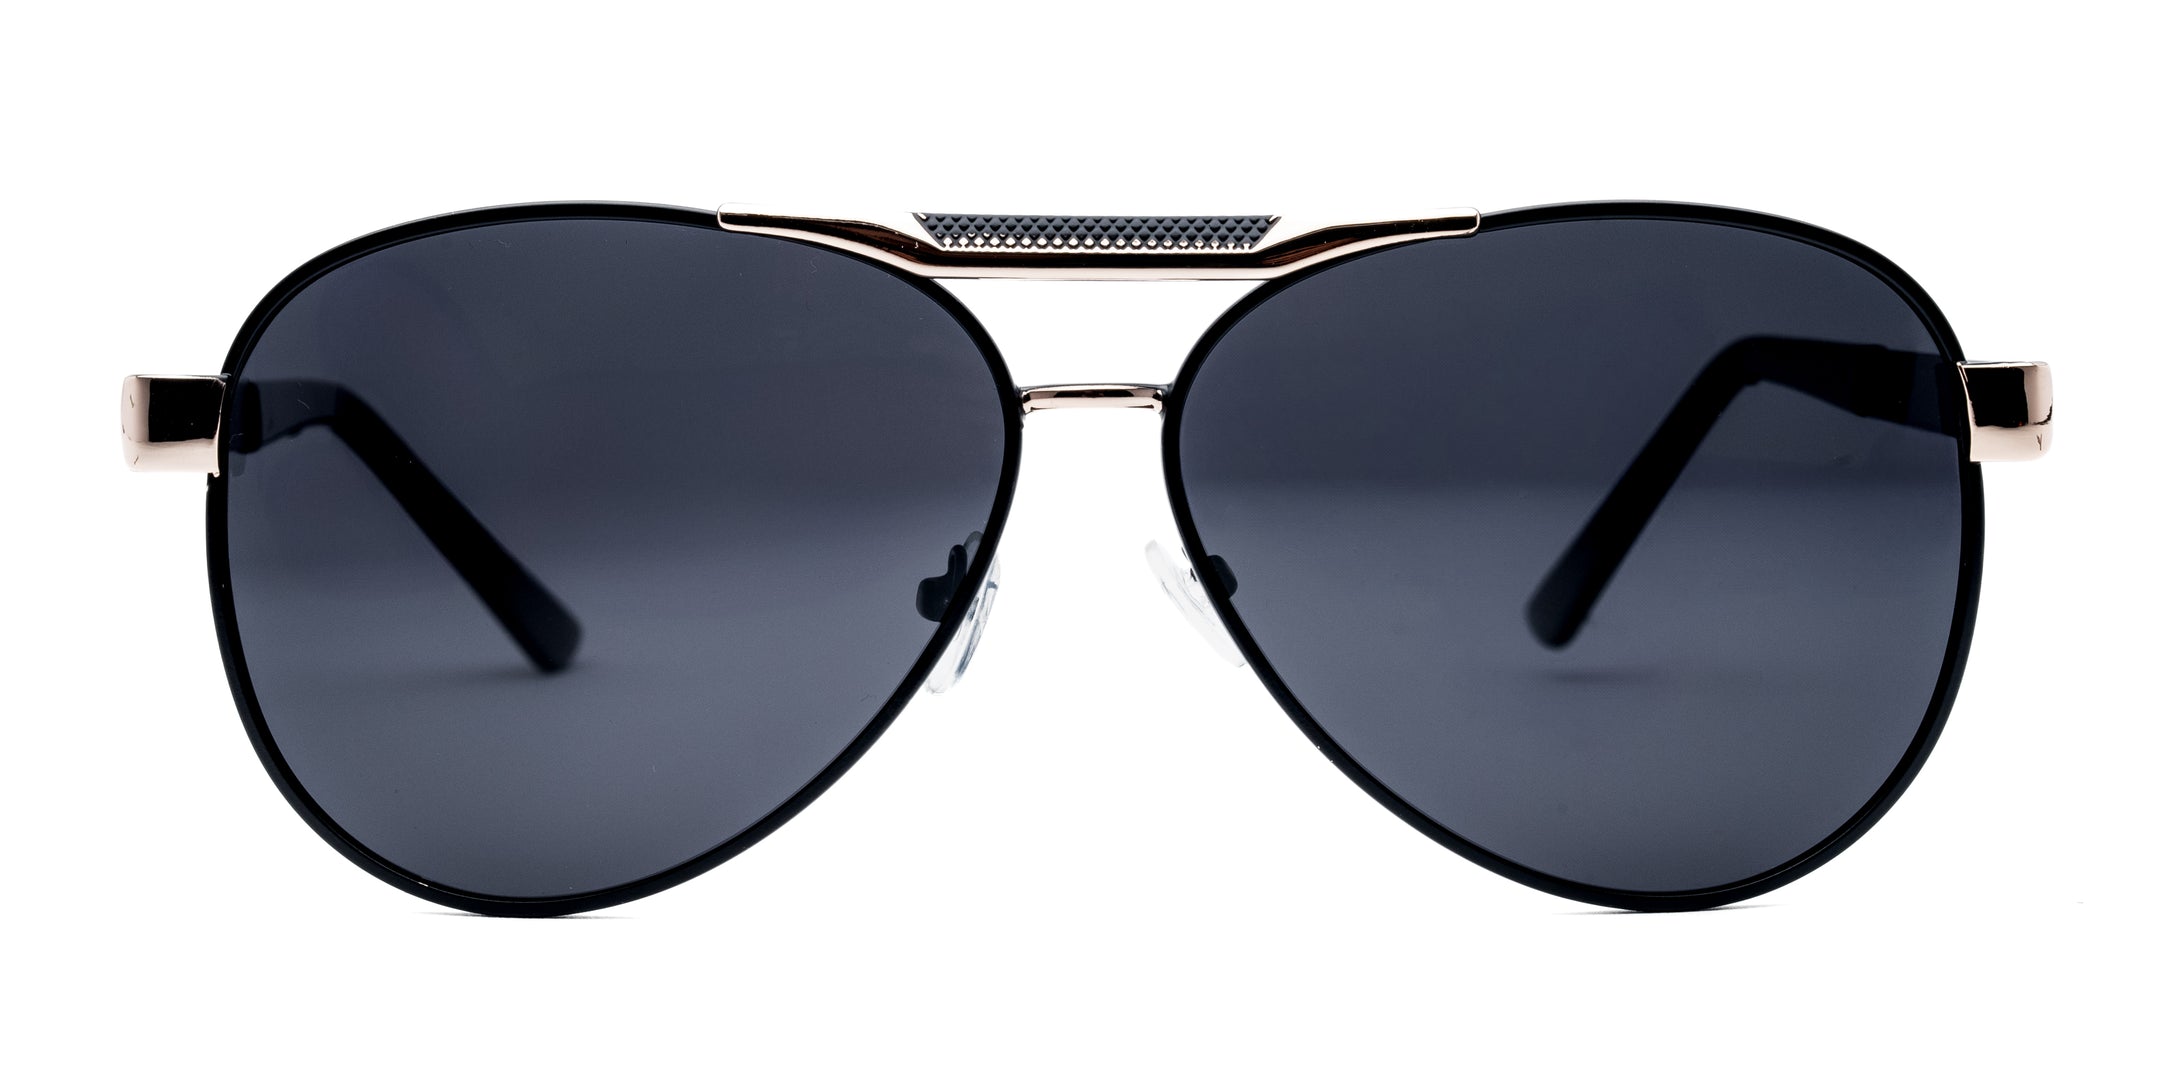 LUXURIANT™ SUNGLASSES - CLASSICS (Black & Gold) - LadyBoss Glasses